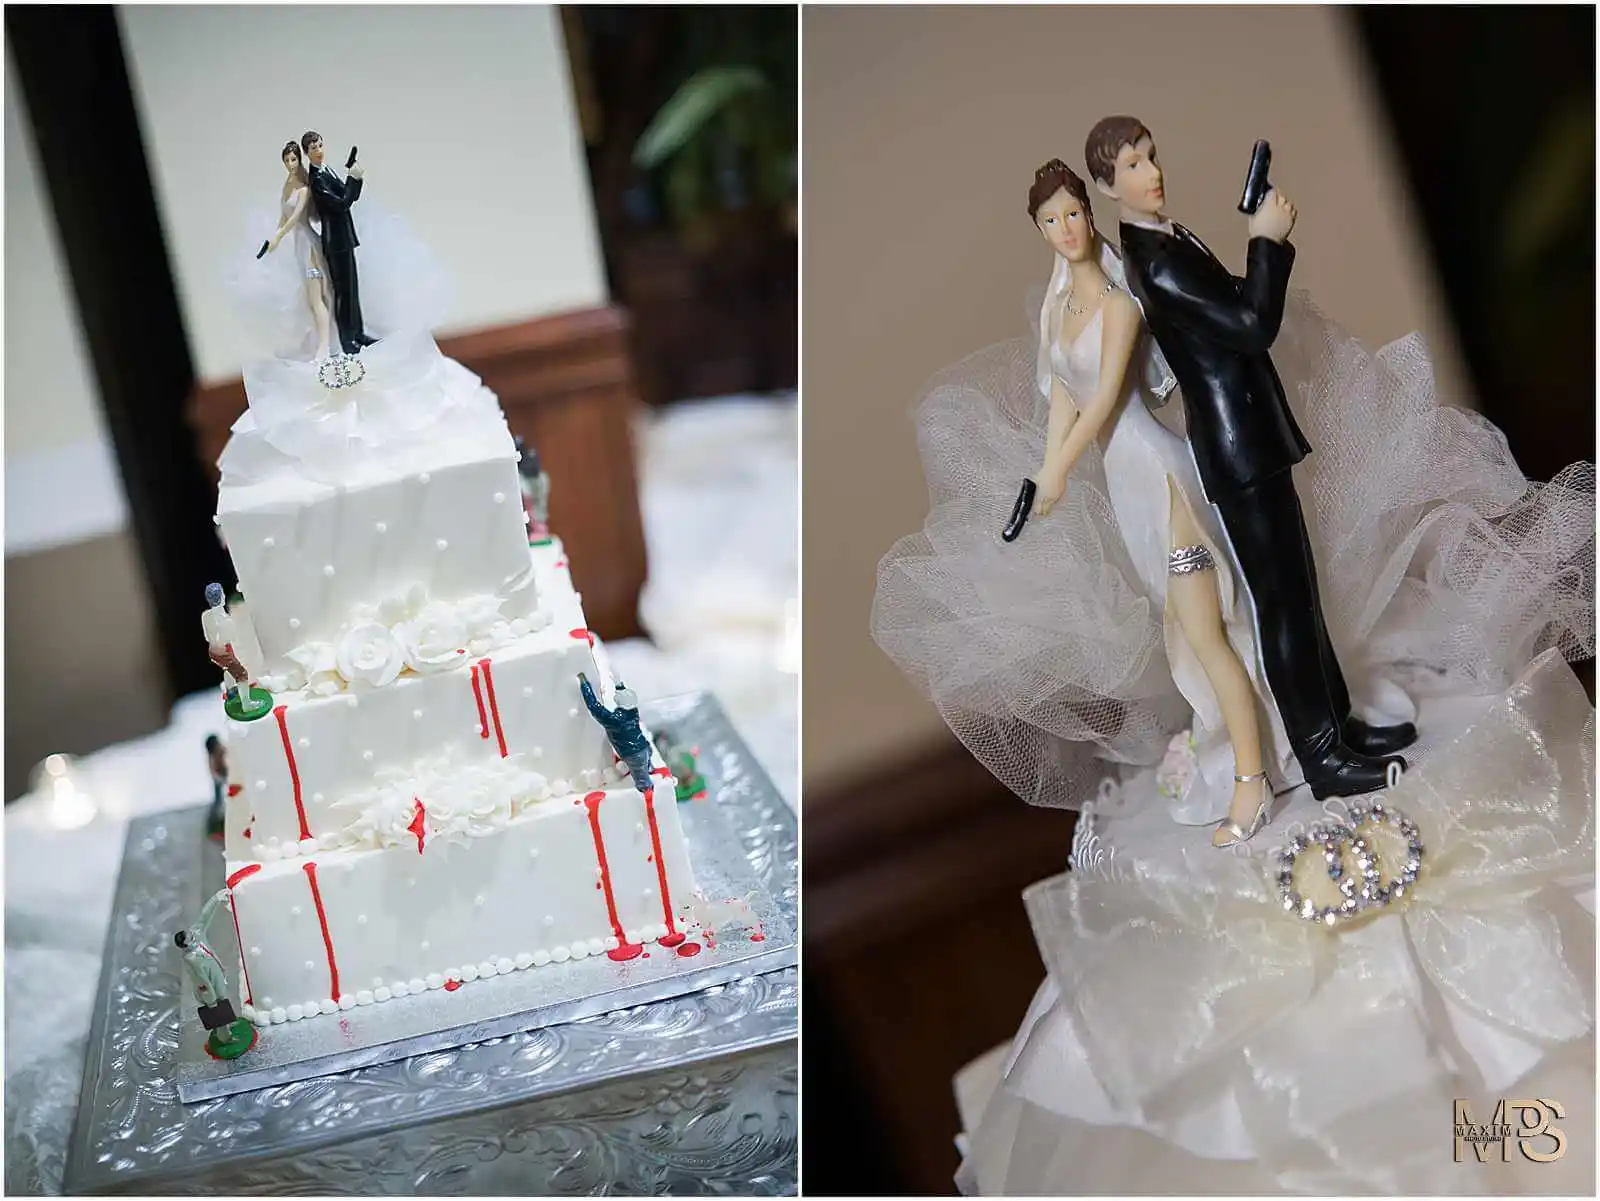 Bride and groom figurine cake toppers on wedding cake.